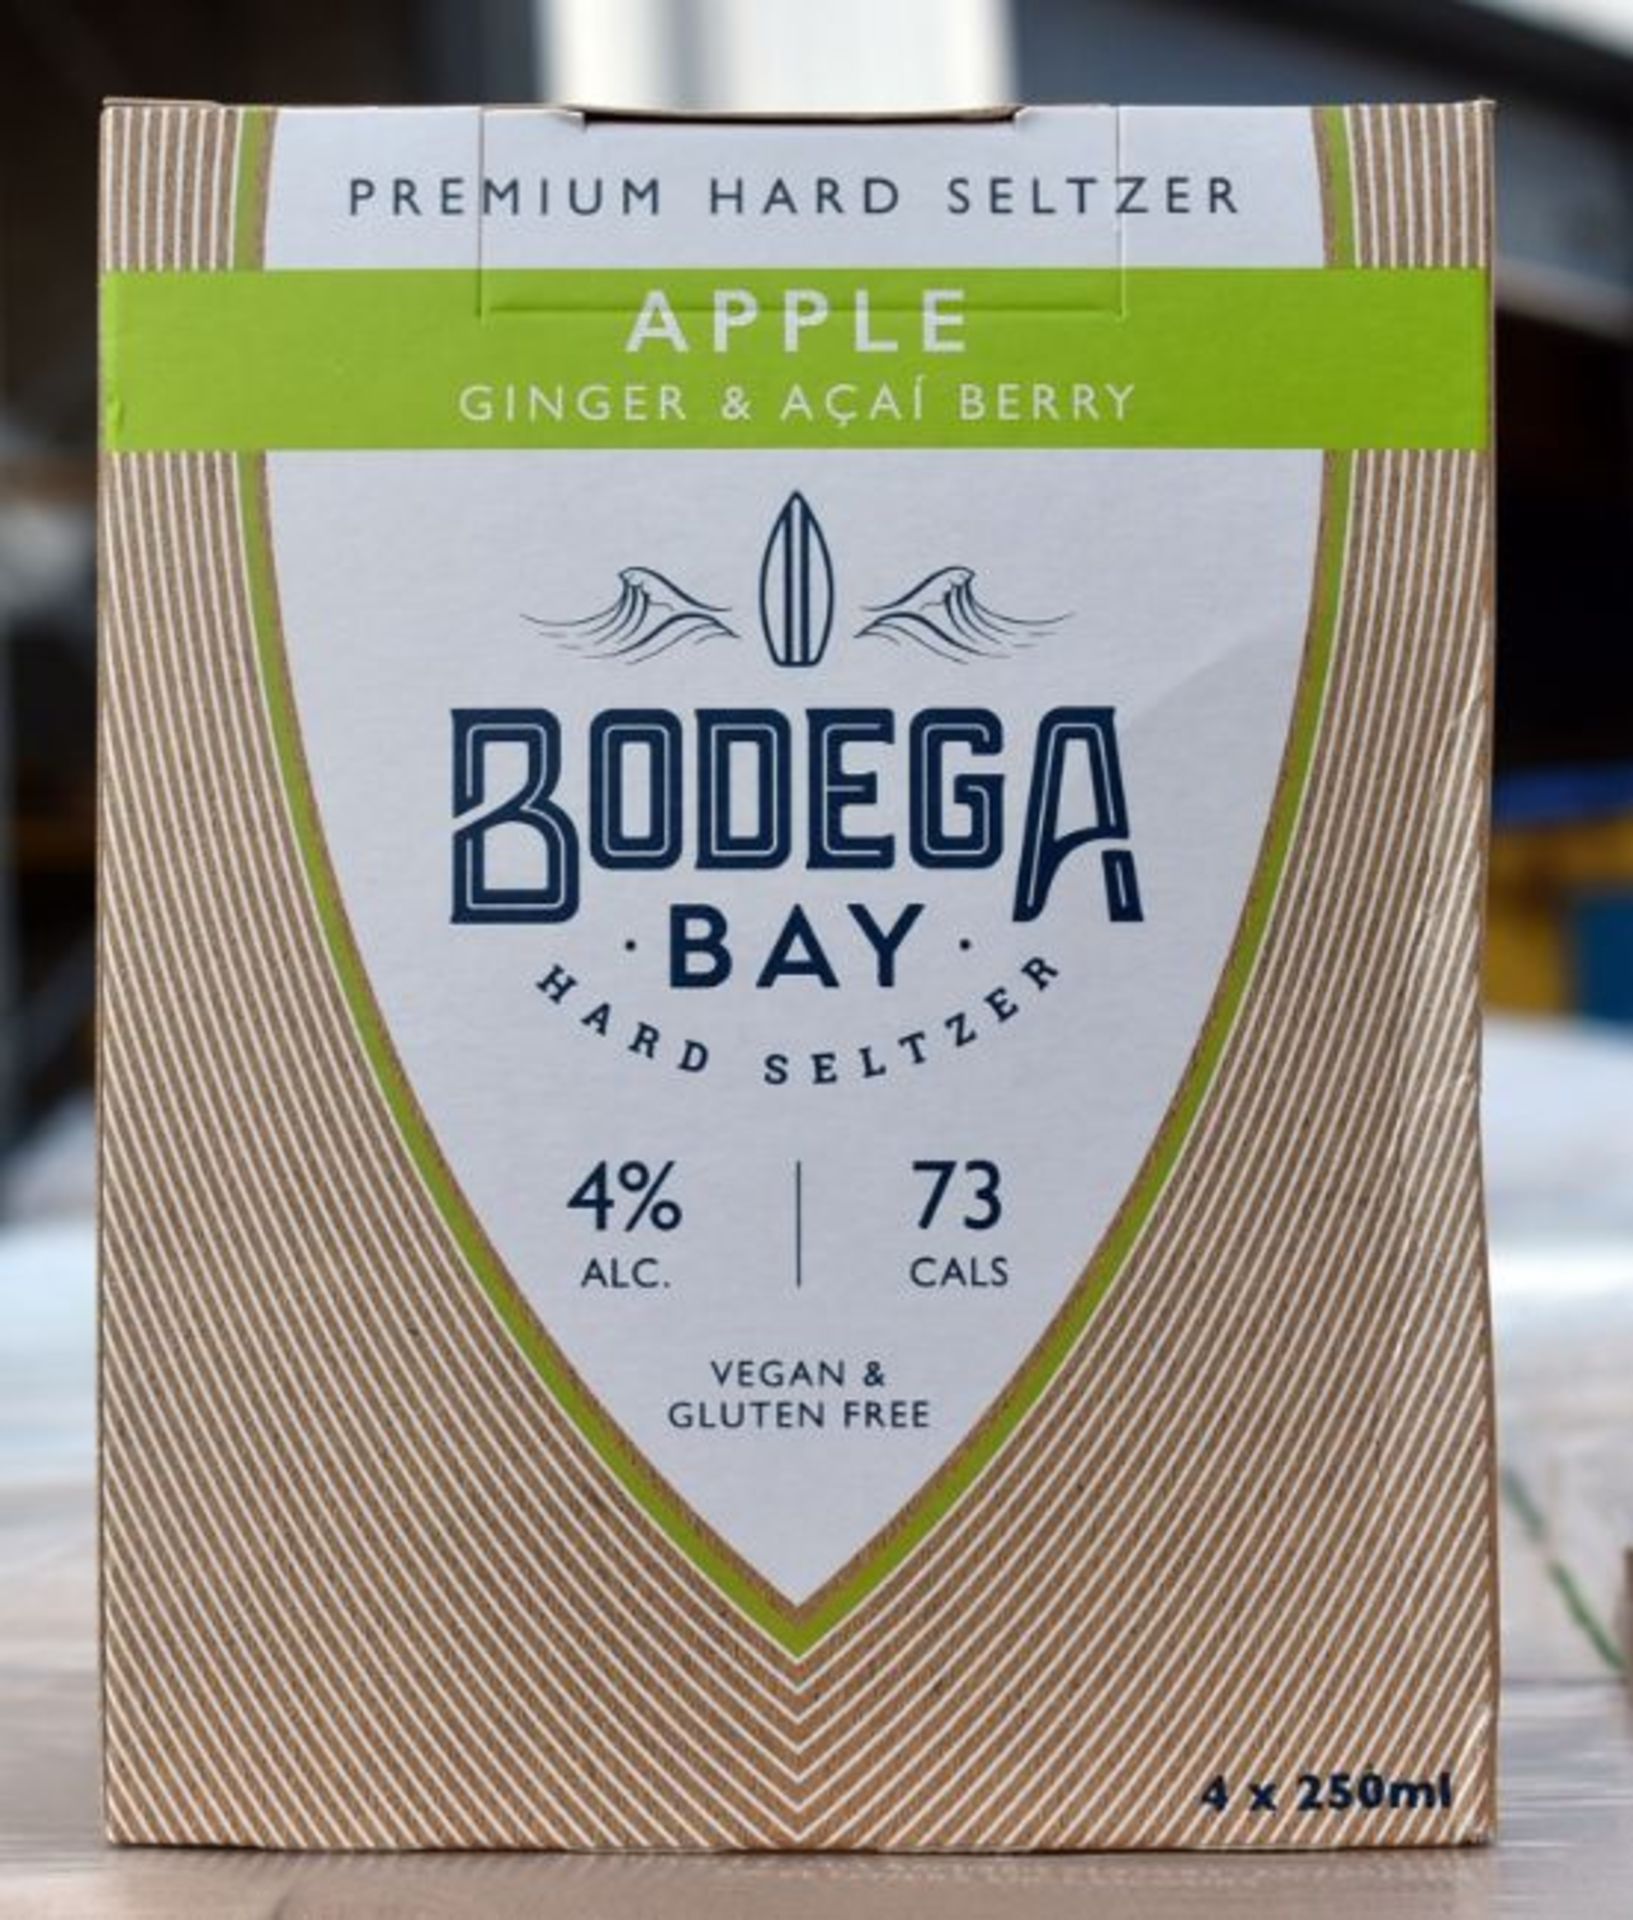 24 x Bodega Bay Hard Seltzer 250ml Alcoholic Sparkling Water Drinks - Apple Ginger & Acai Berry - 4% - Image 7 of 9